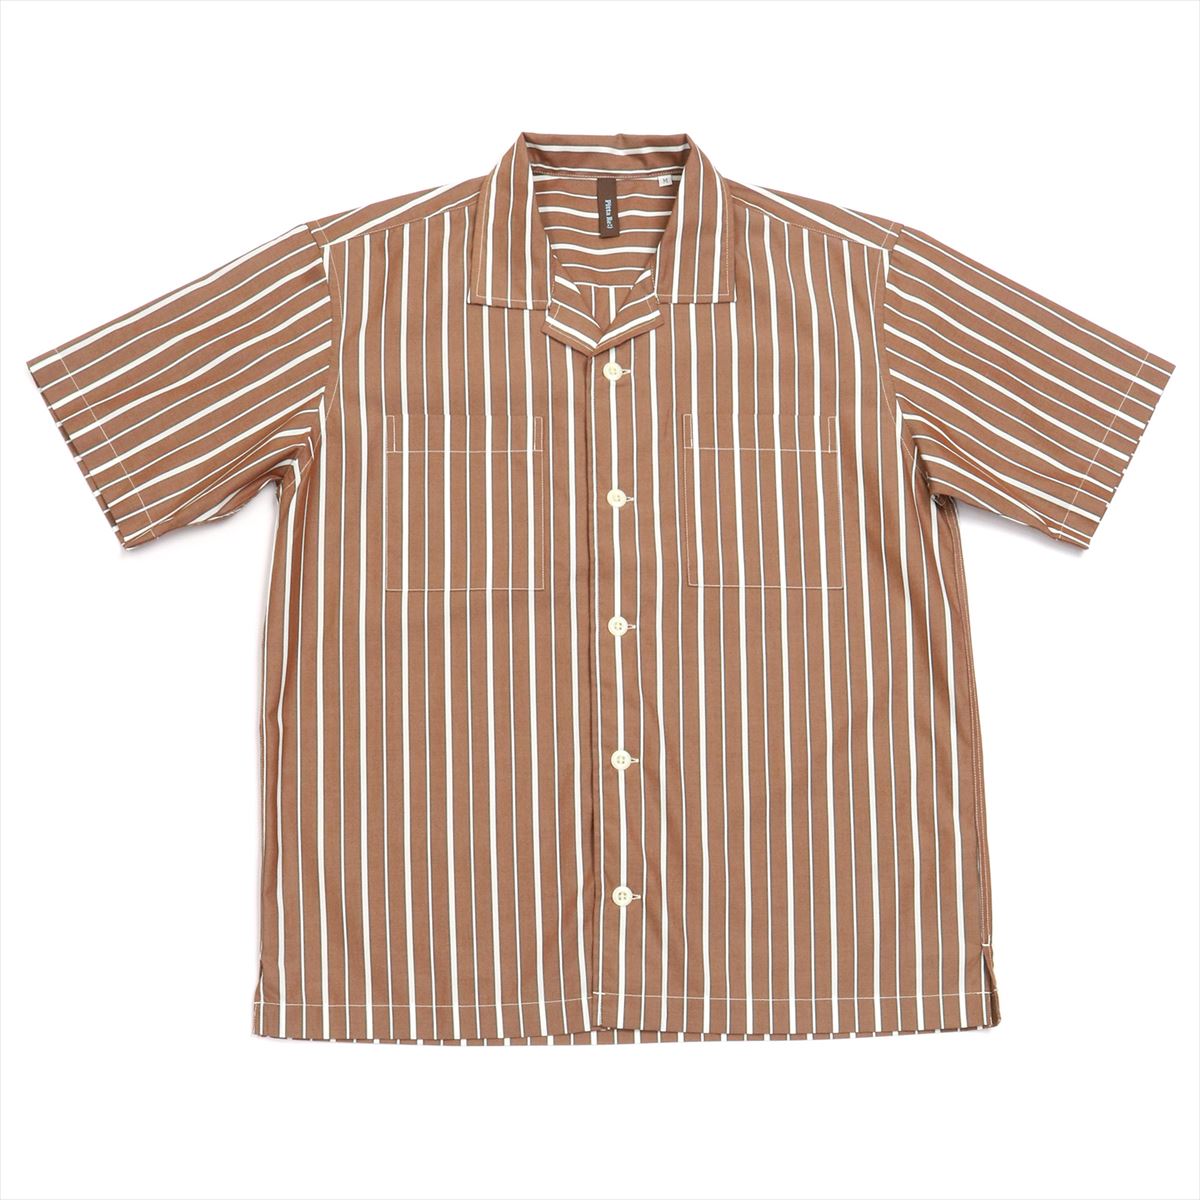 【50%OFF】【SALE】【Pitta Re:)】 オープンカラー 半袖 形態安定 綿100% カジュアルシャツ